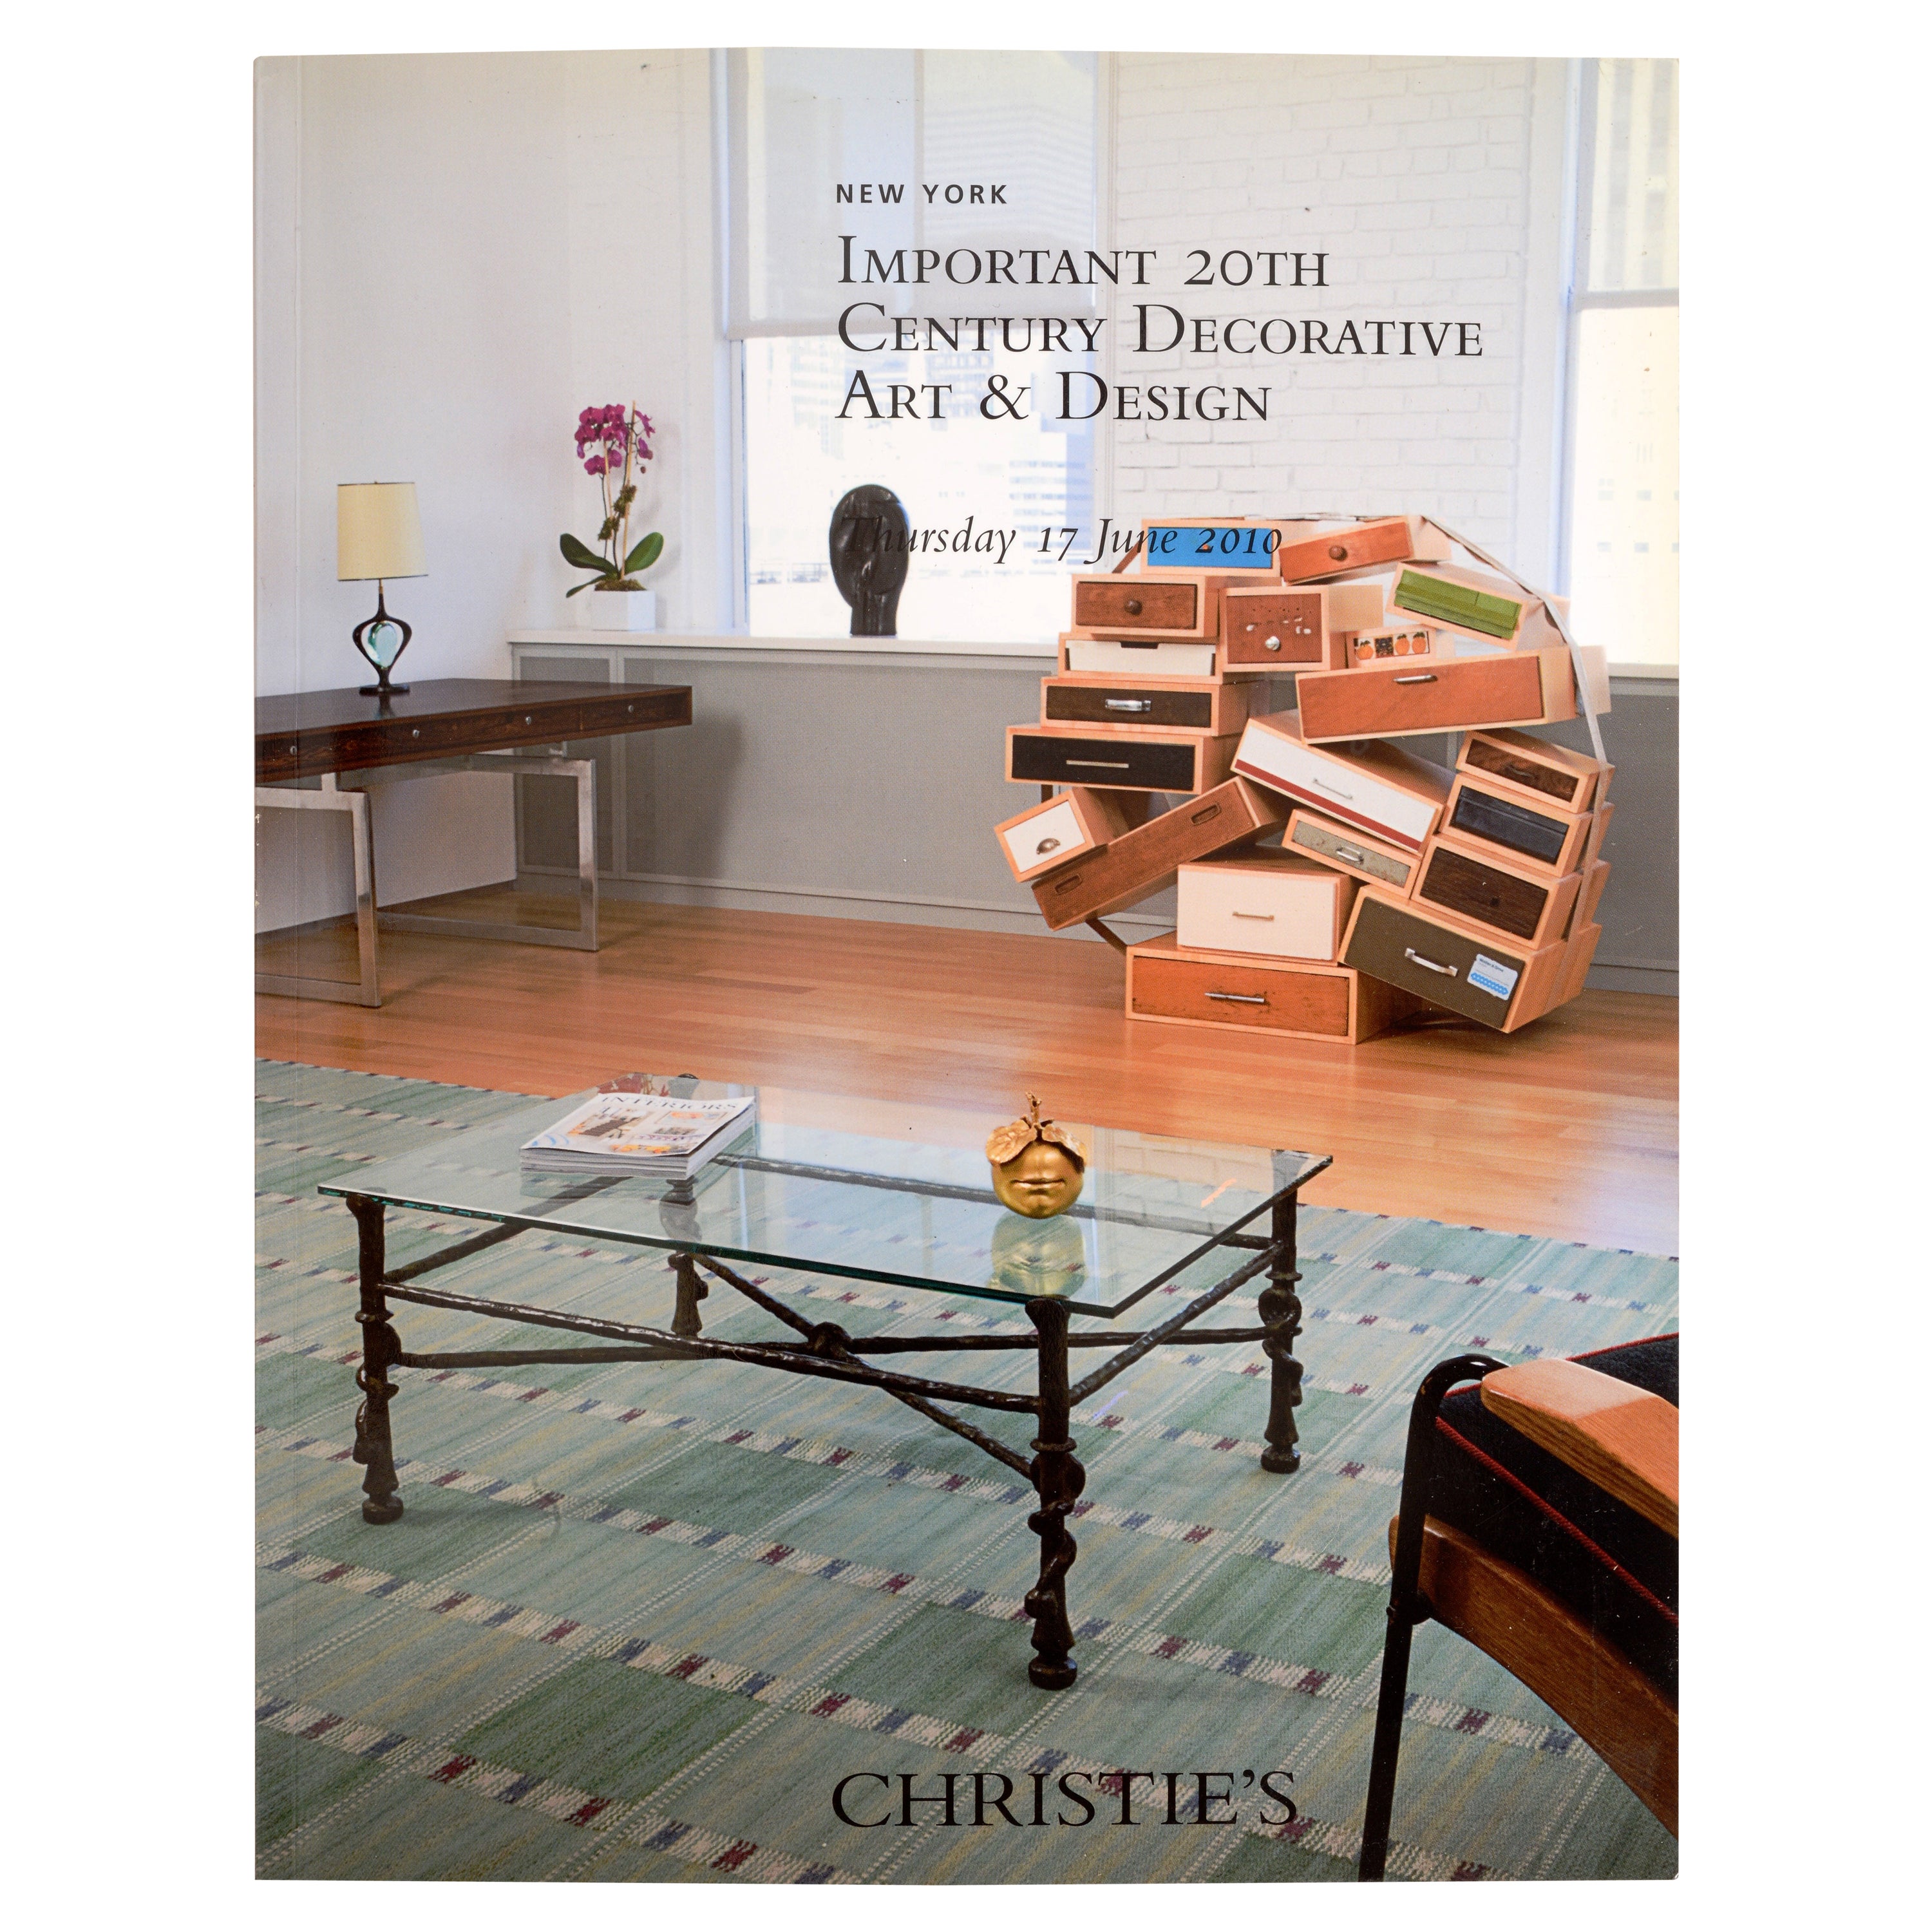 Christies June 2010 Important 20th Century Decorative Art & Design